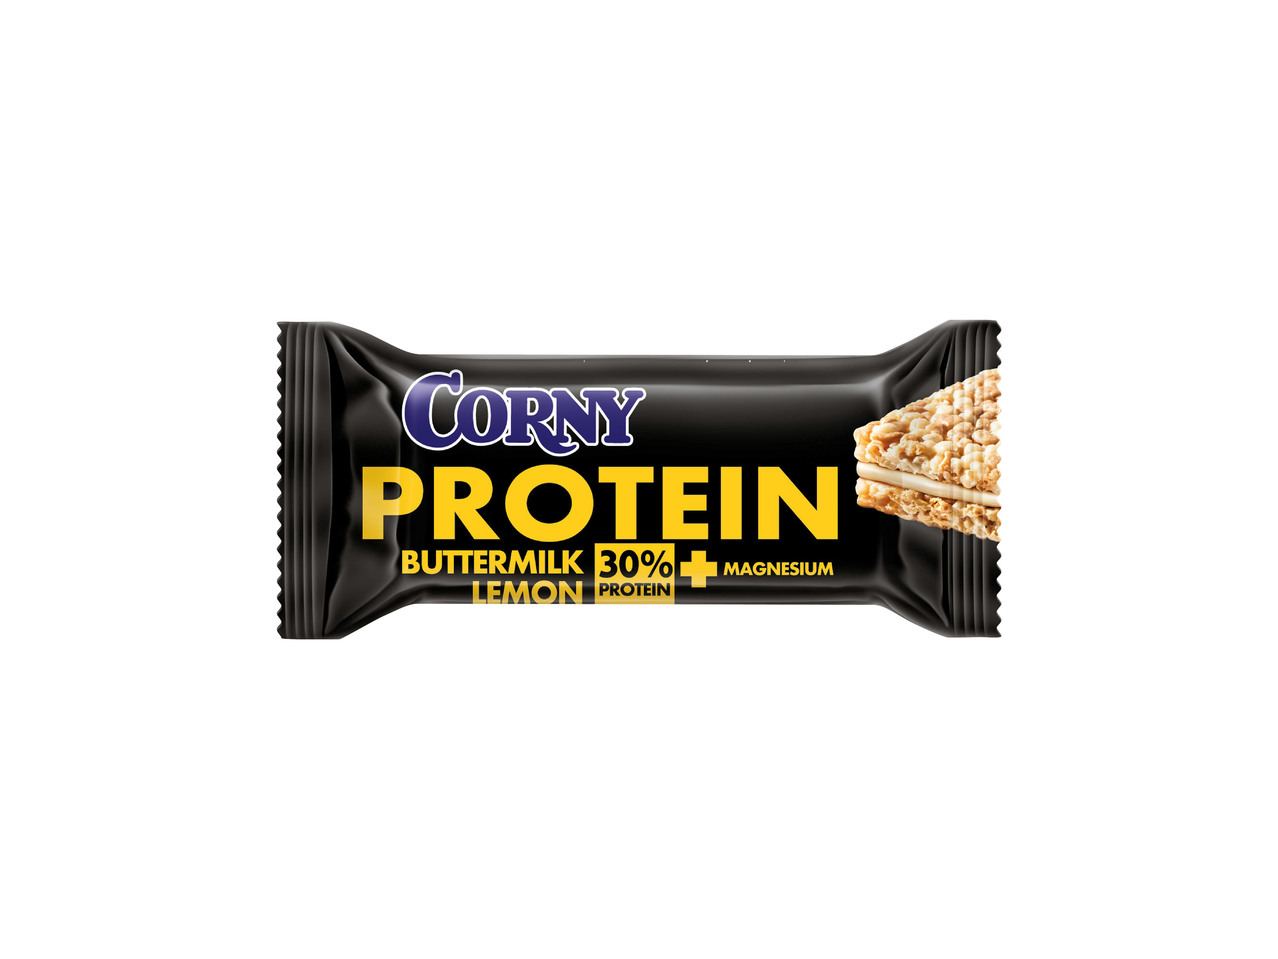 Corny Protein